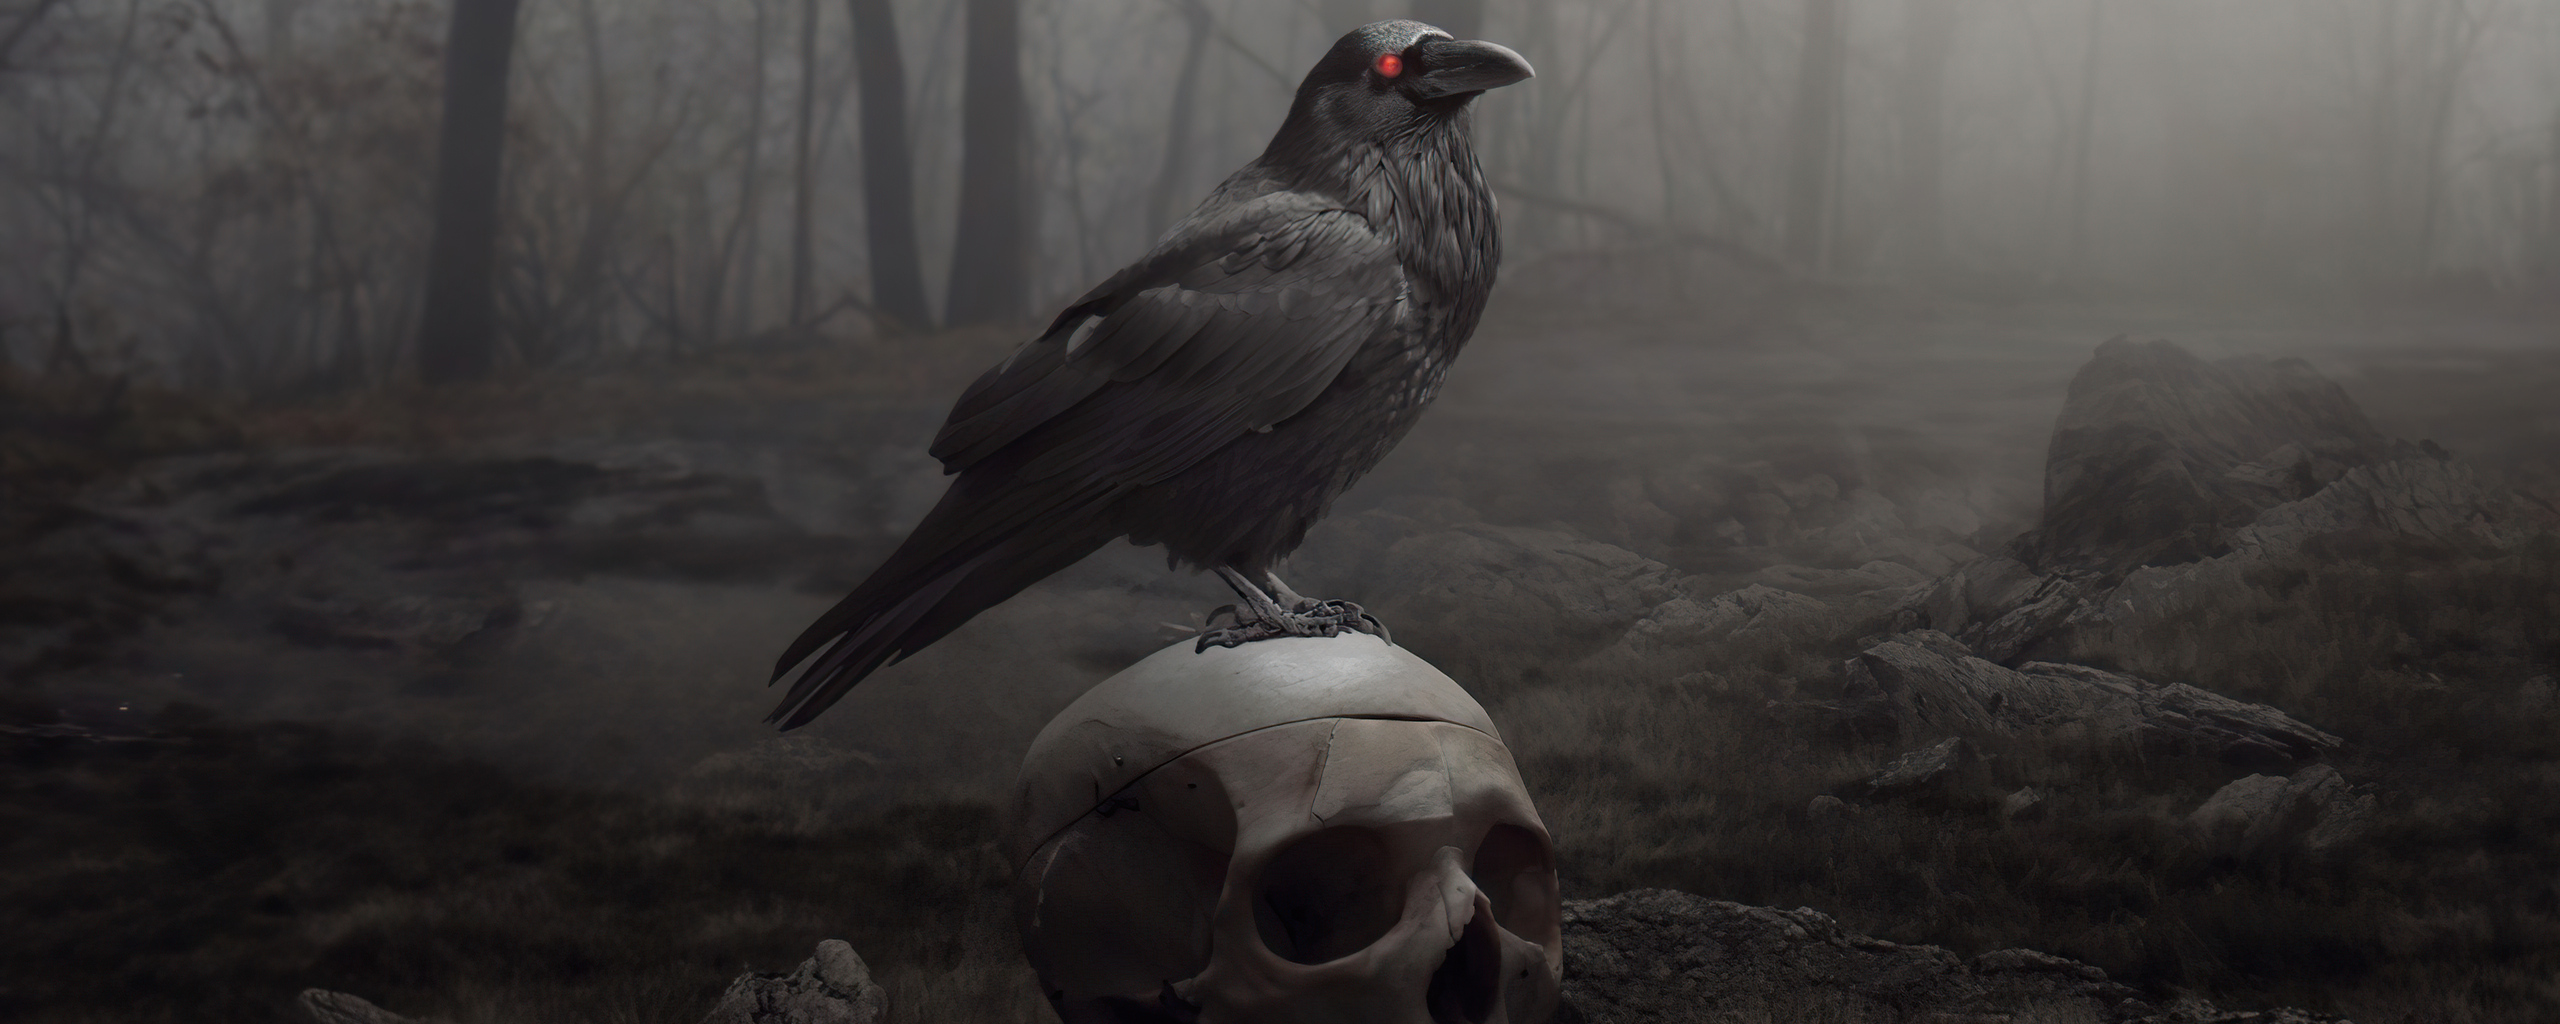 raven-bird-5k-t8.jpg